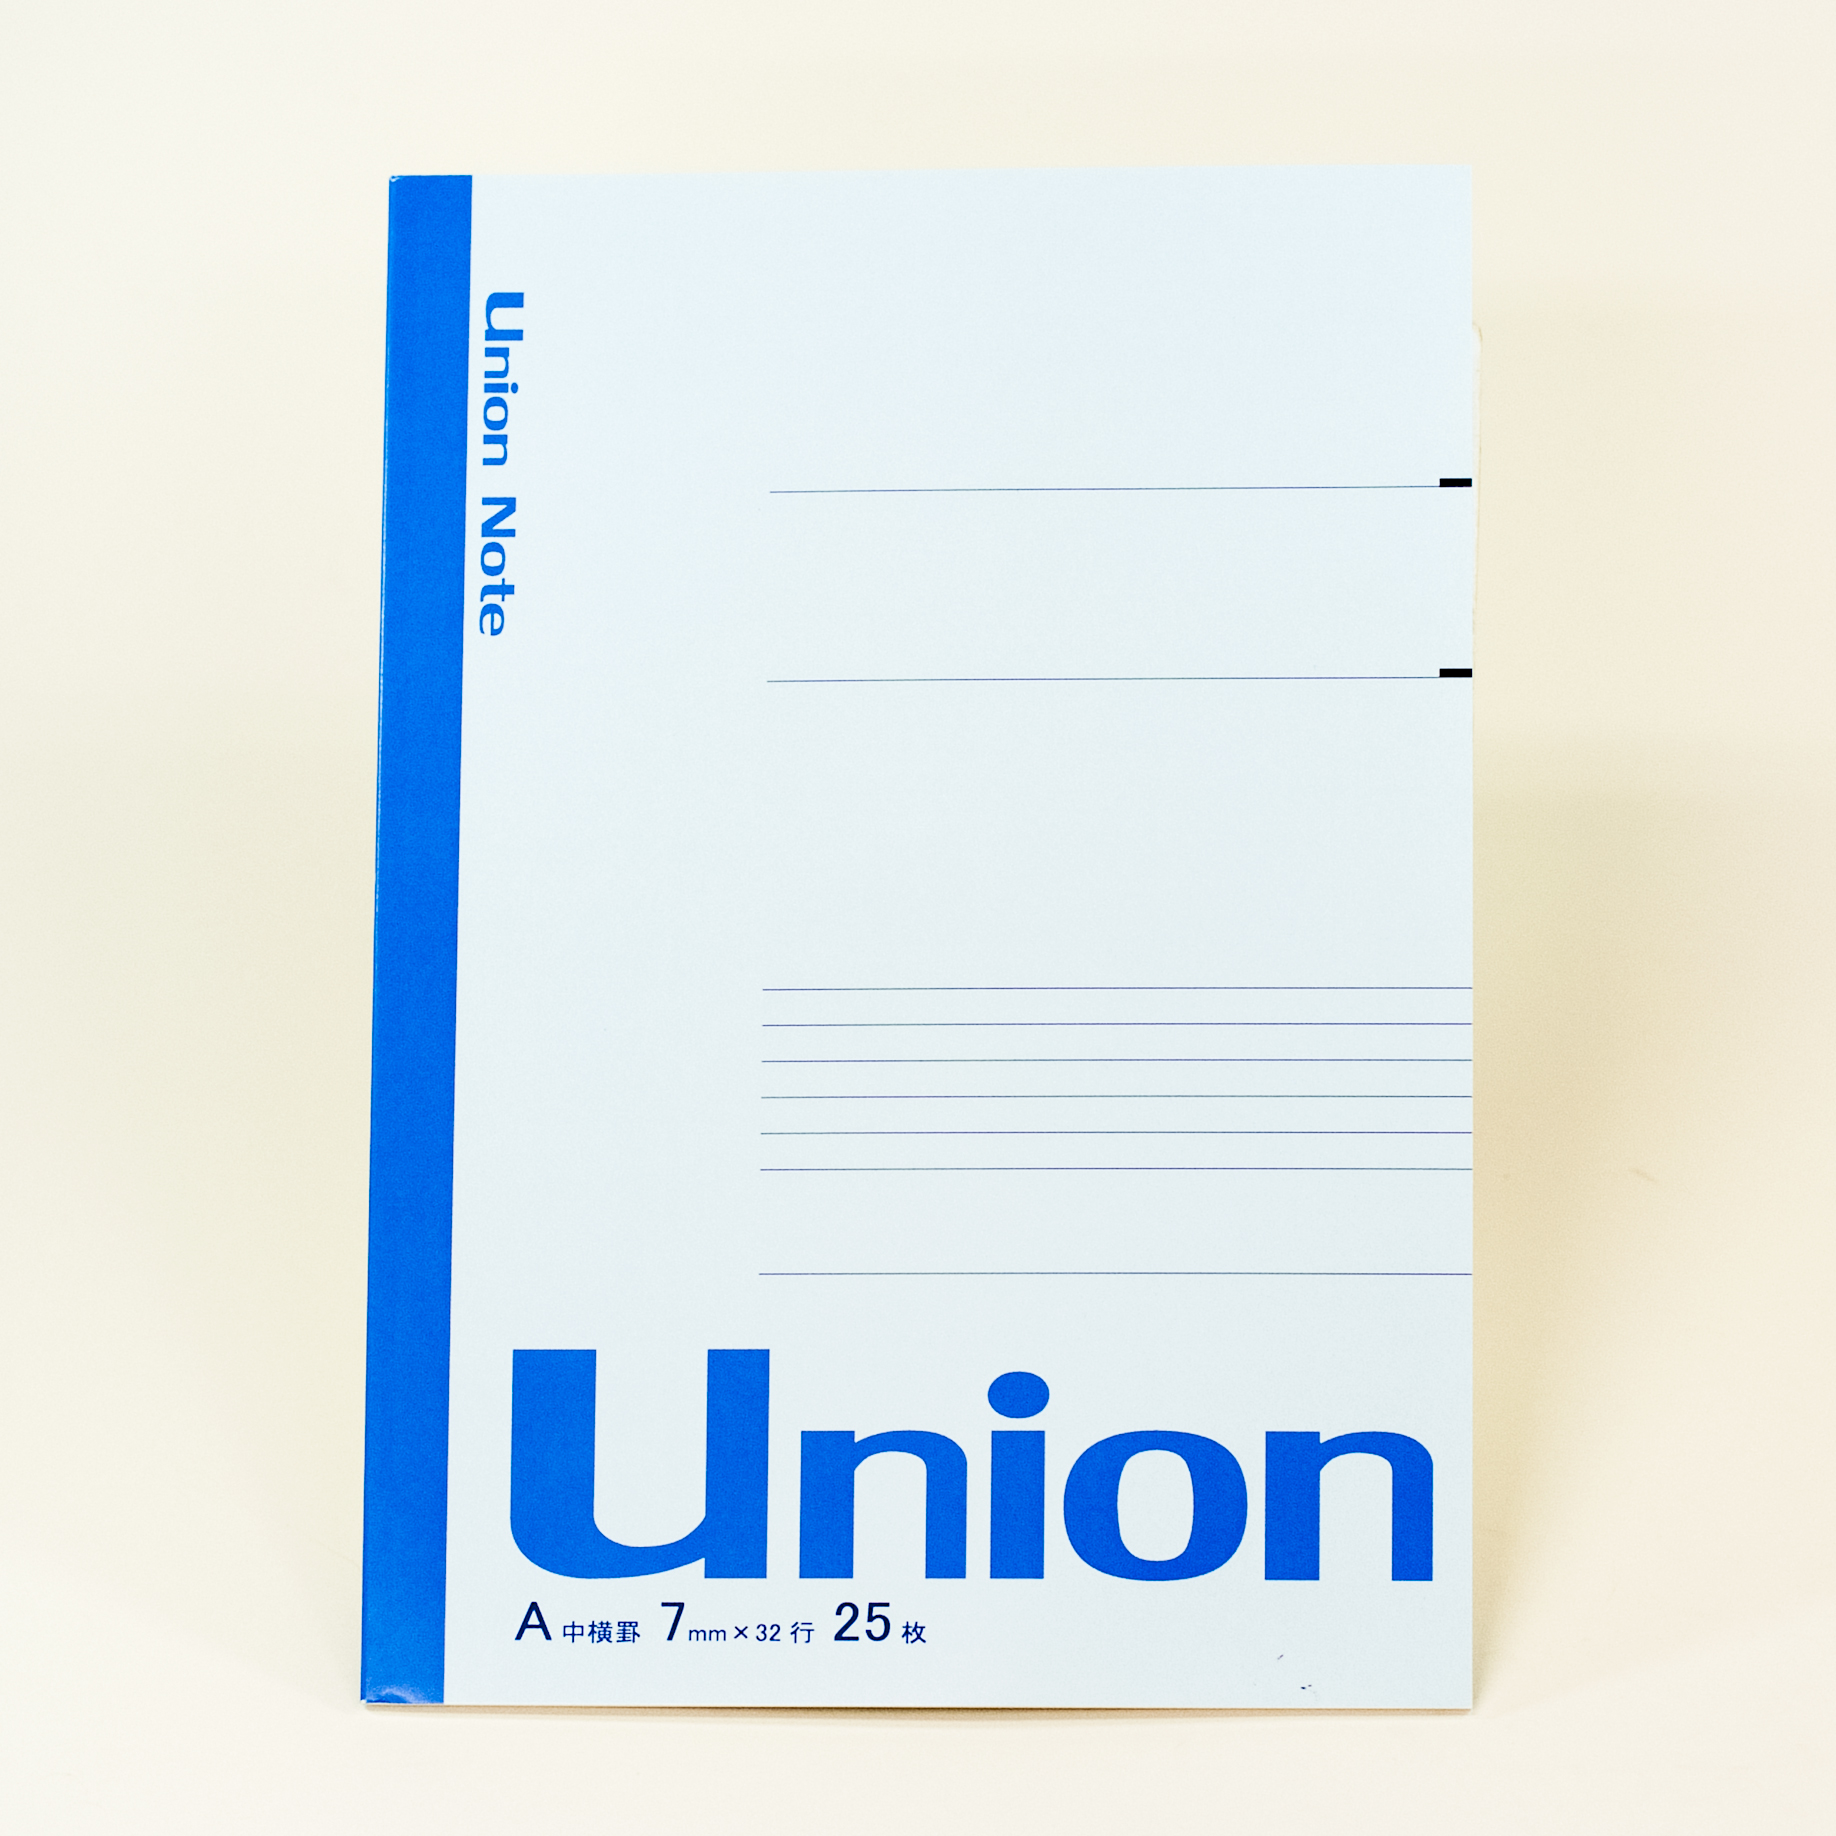 「IWATSU UNION 様」製作のオリジナルノート